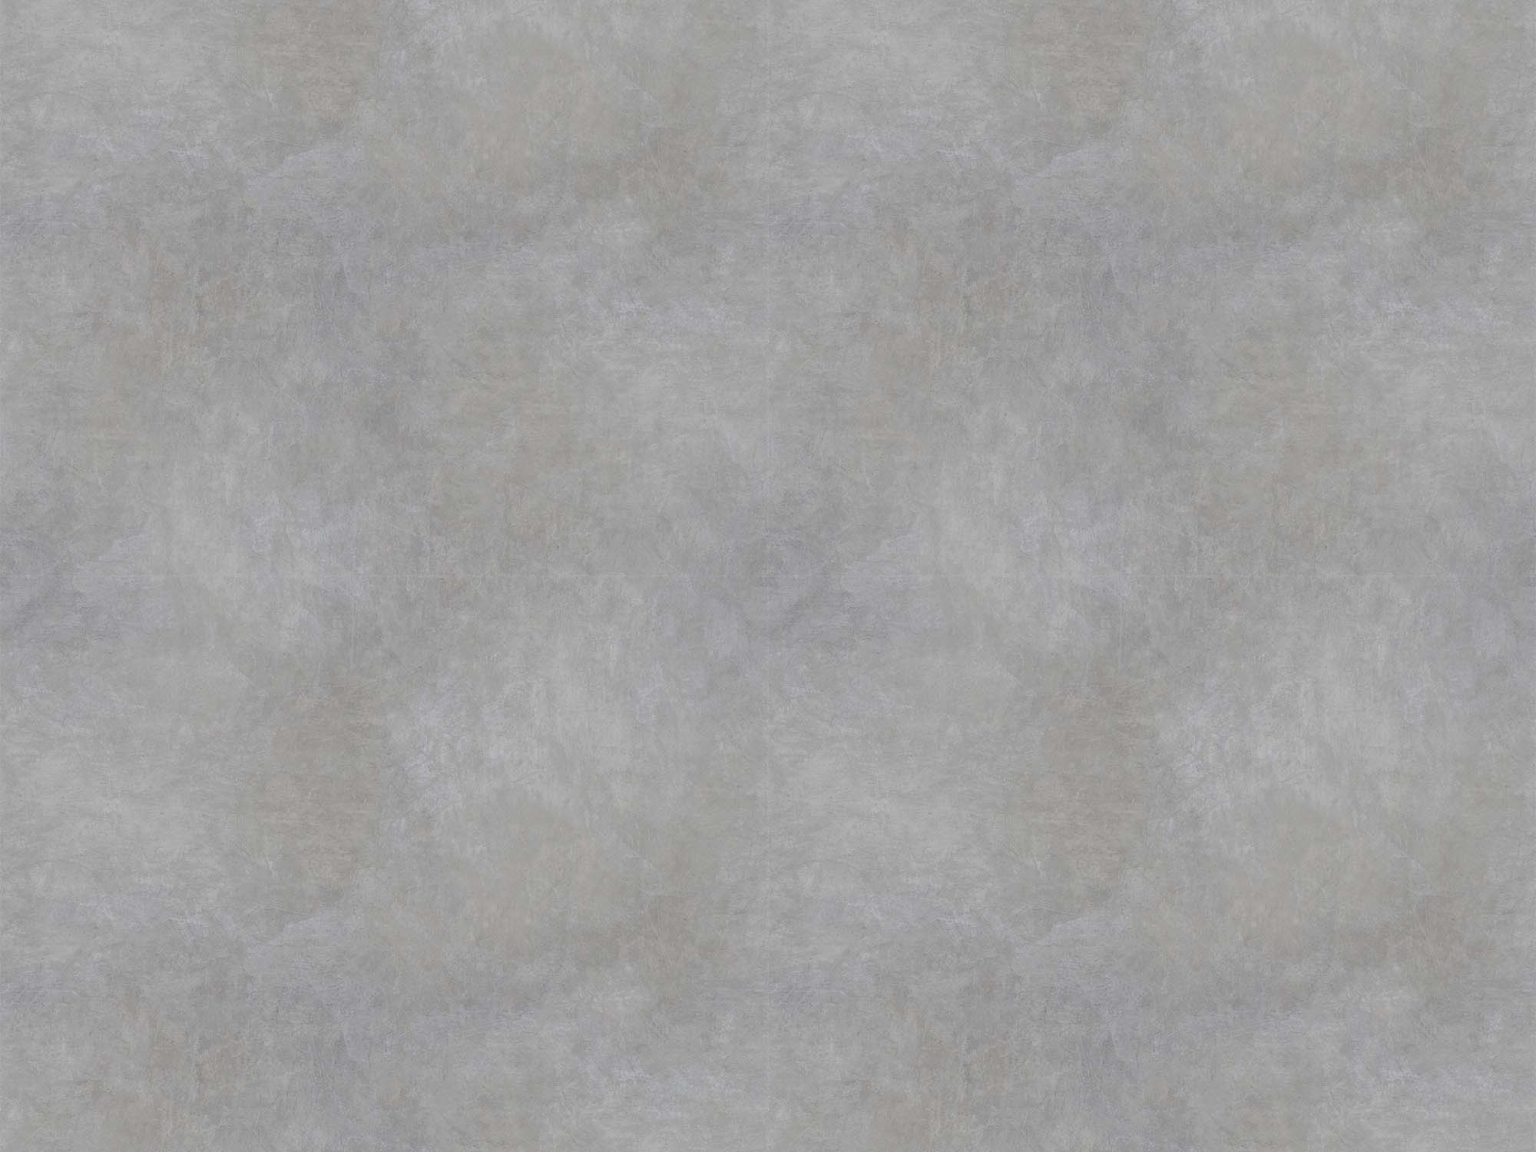 Seamless-Concrete-Wall-Texture-1536x1152-1.jpg